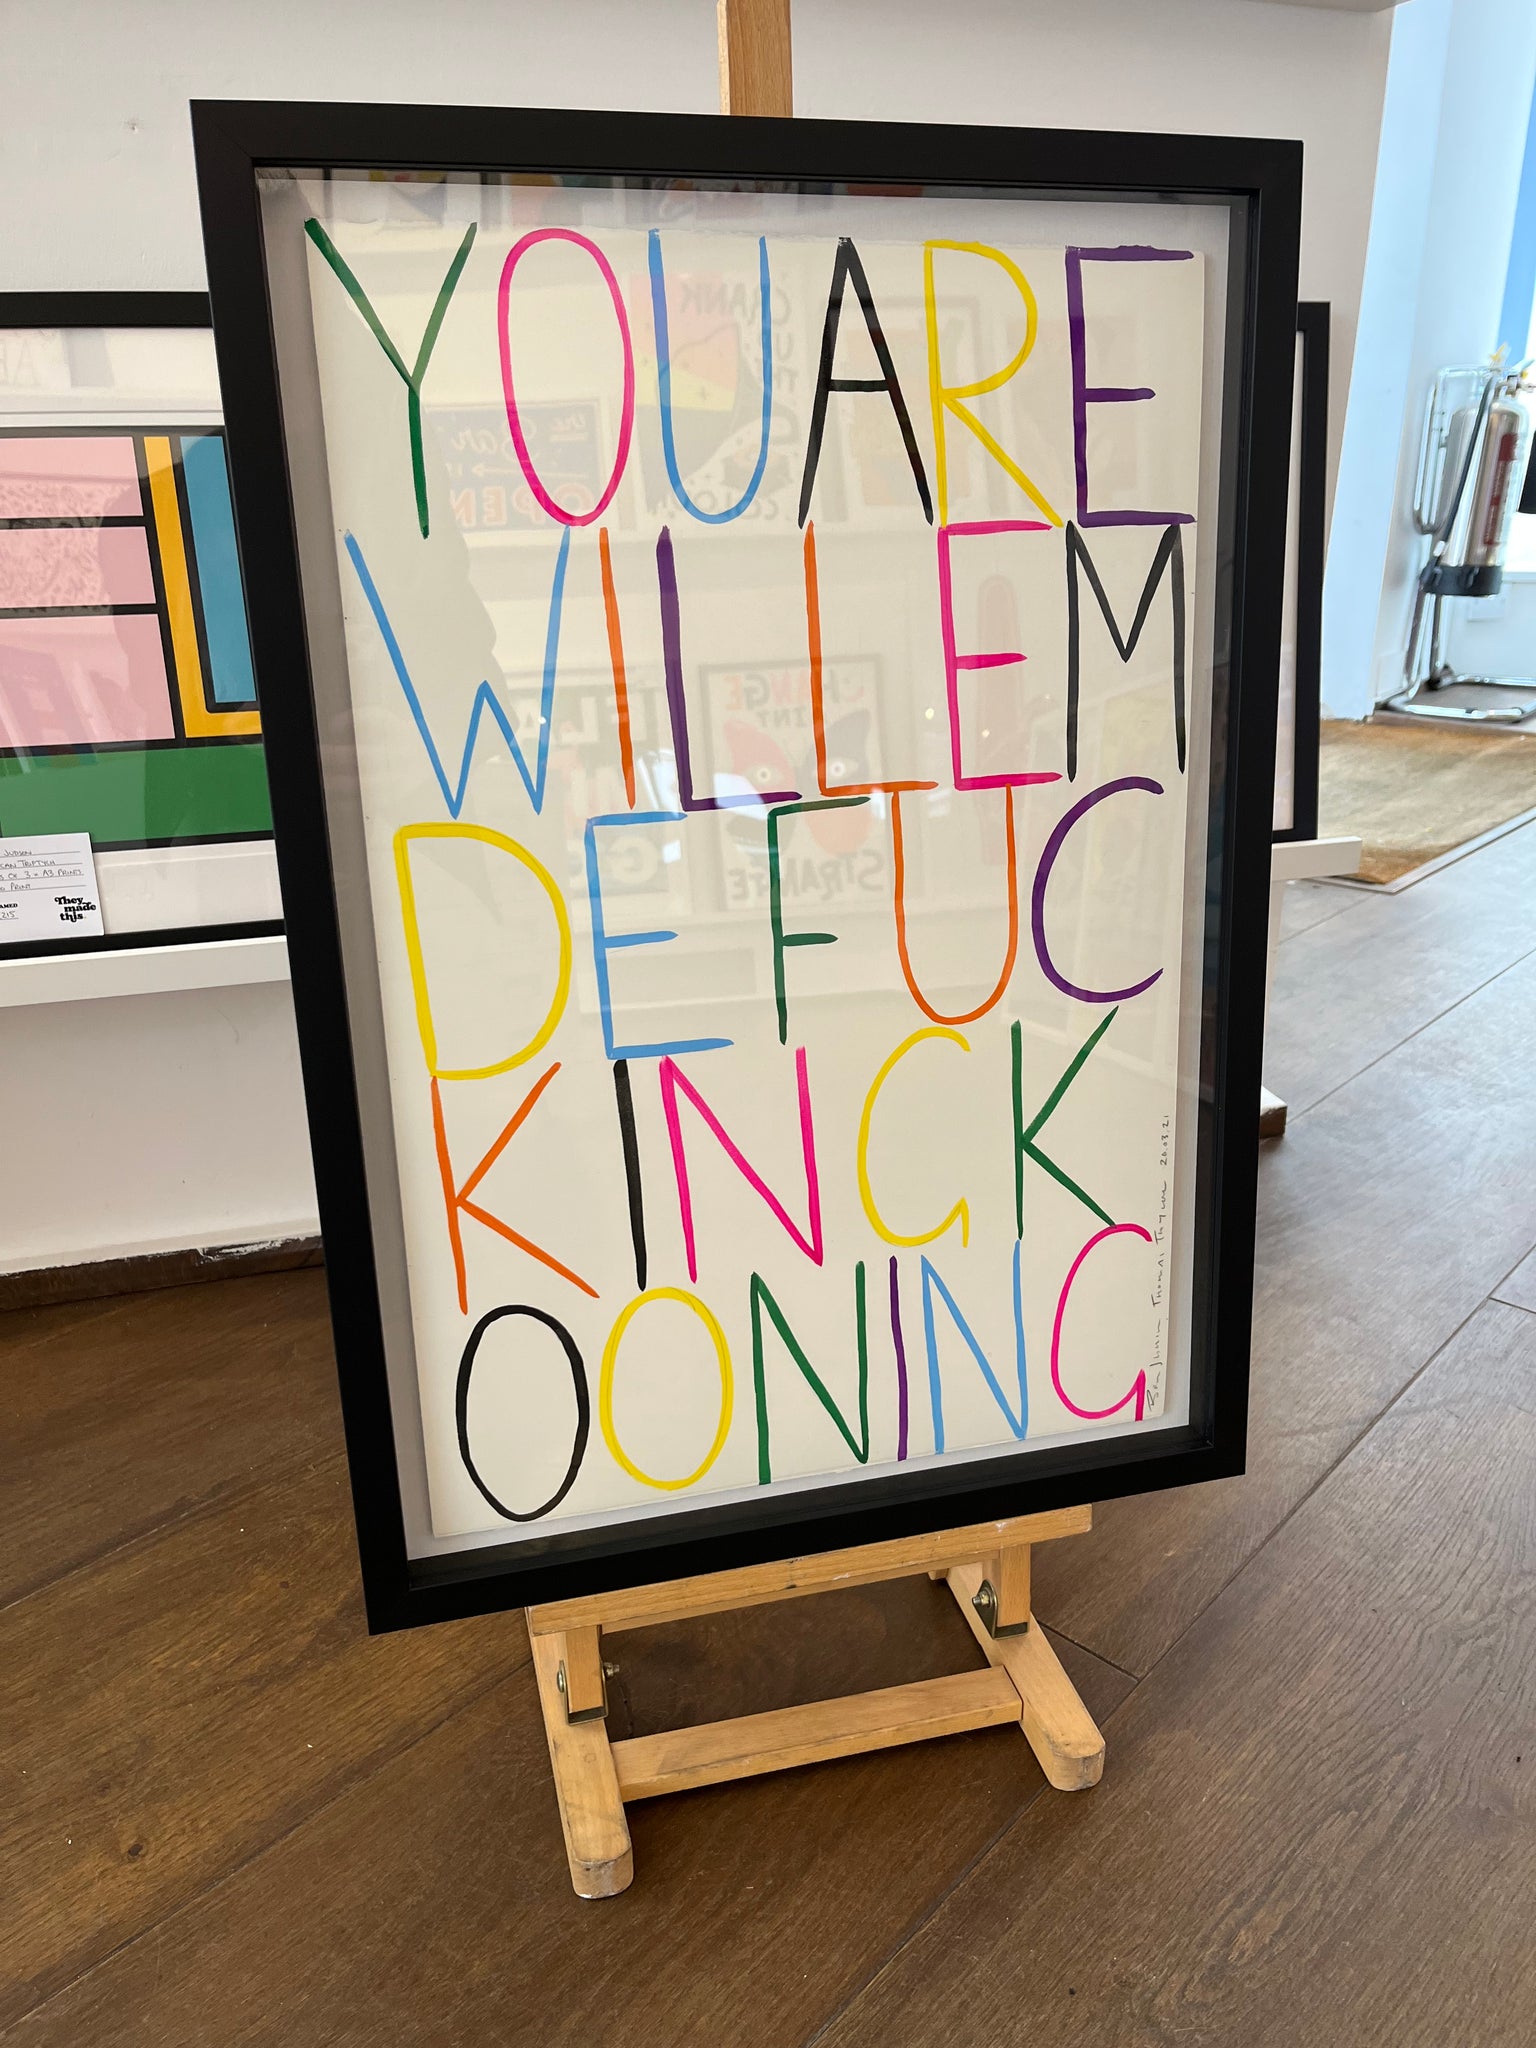 You are Willem de fucking Kooning - original painting